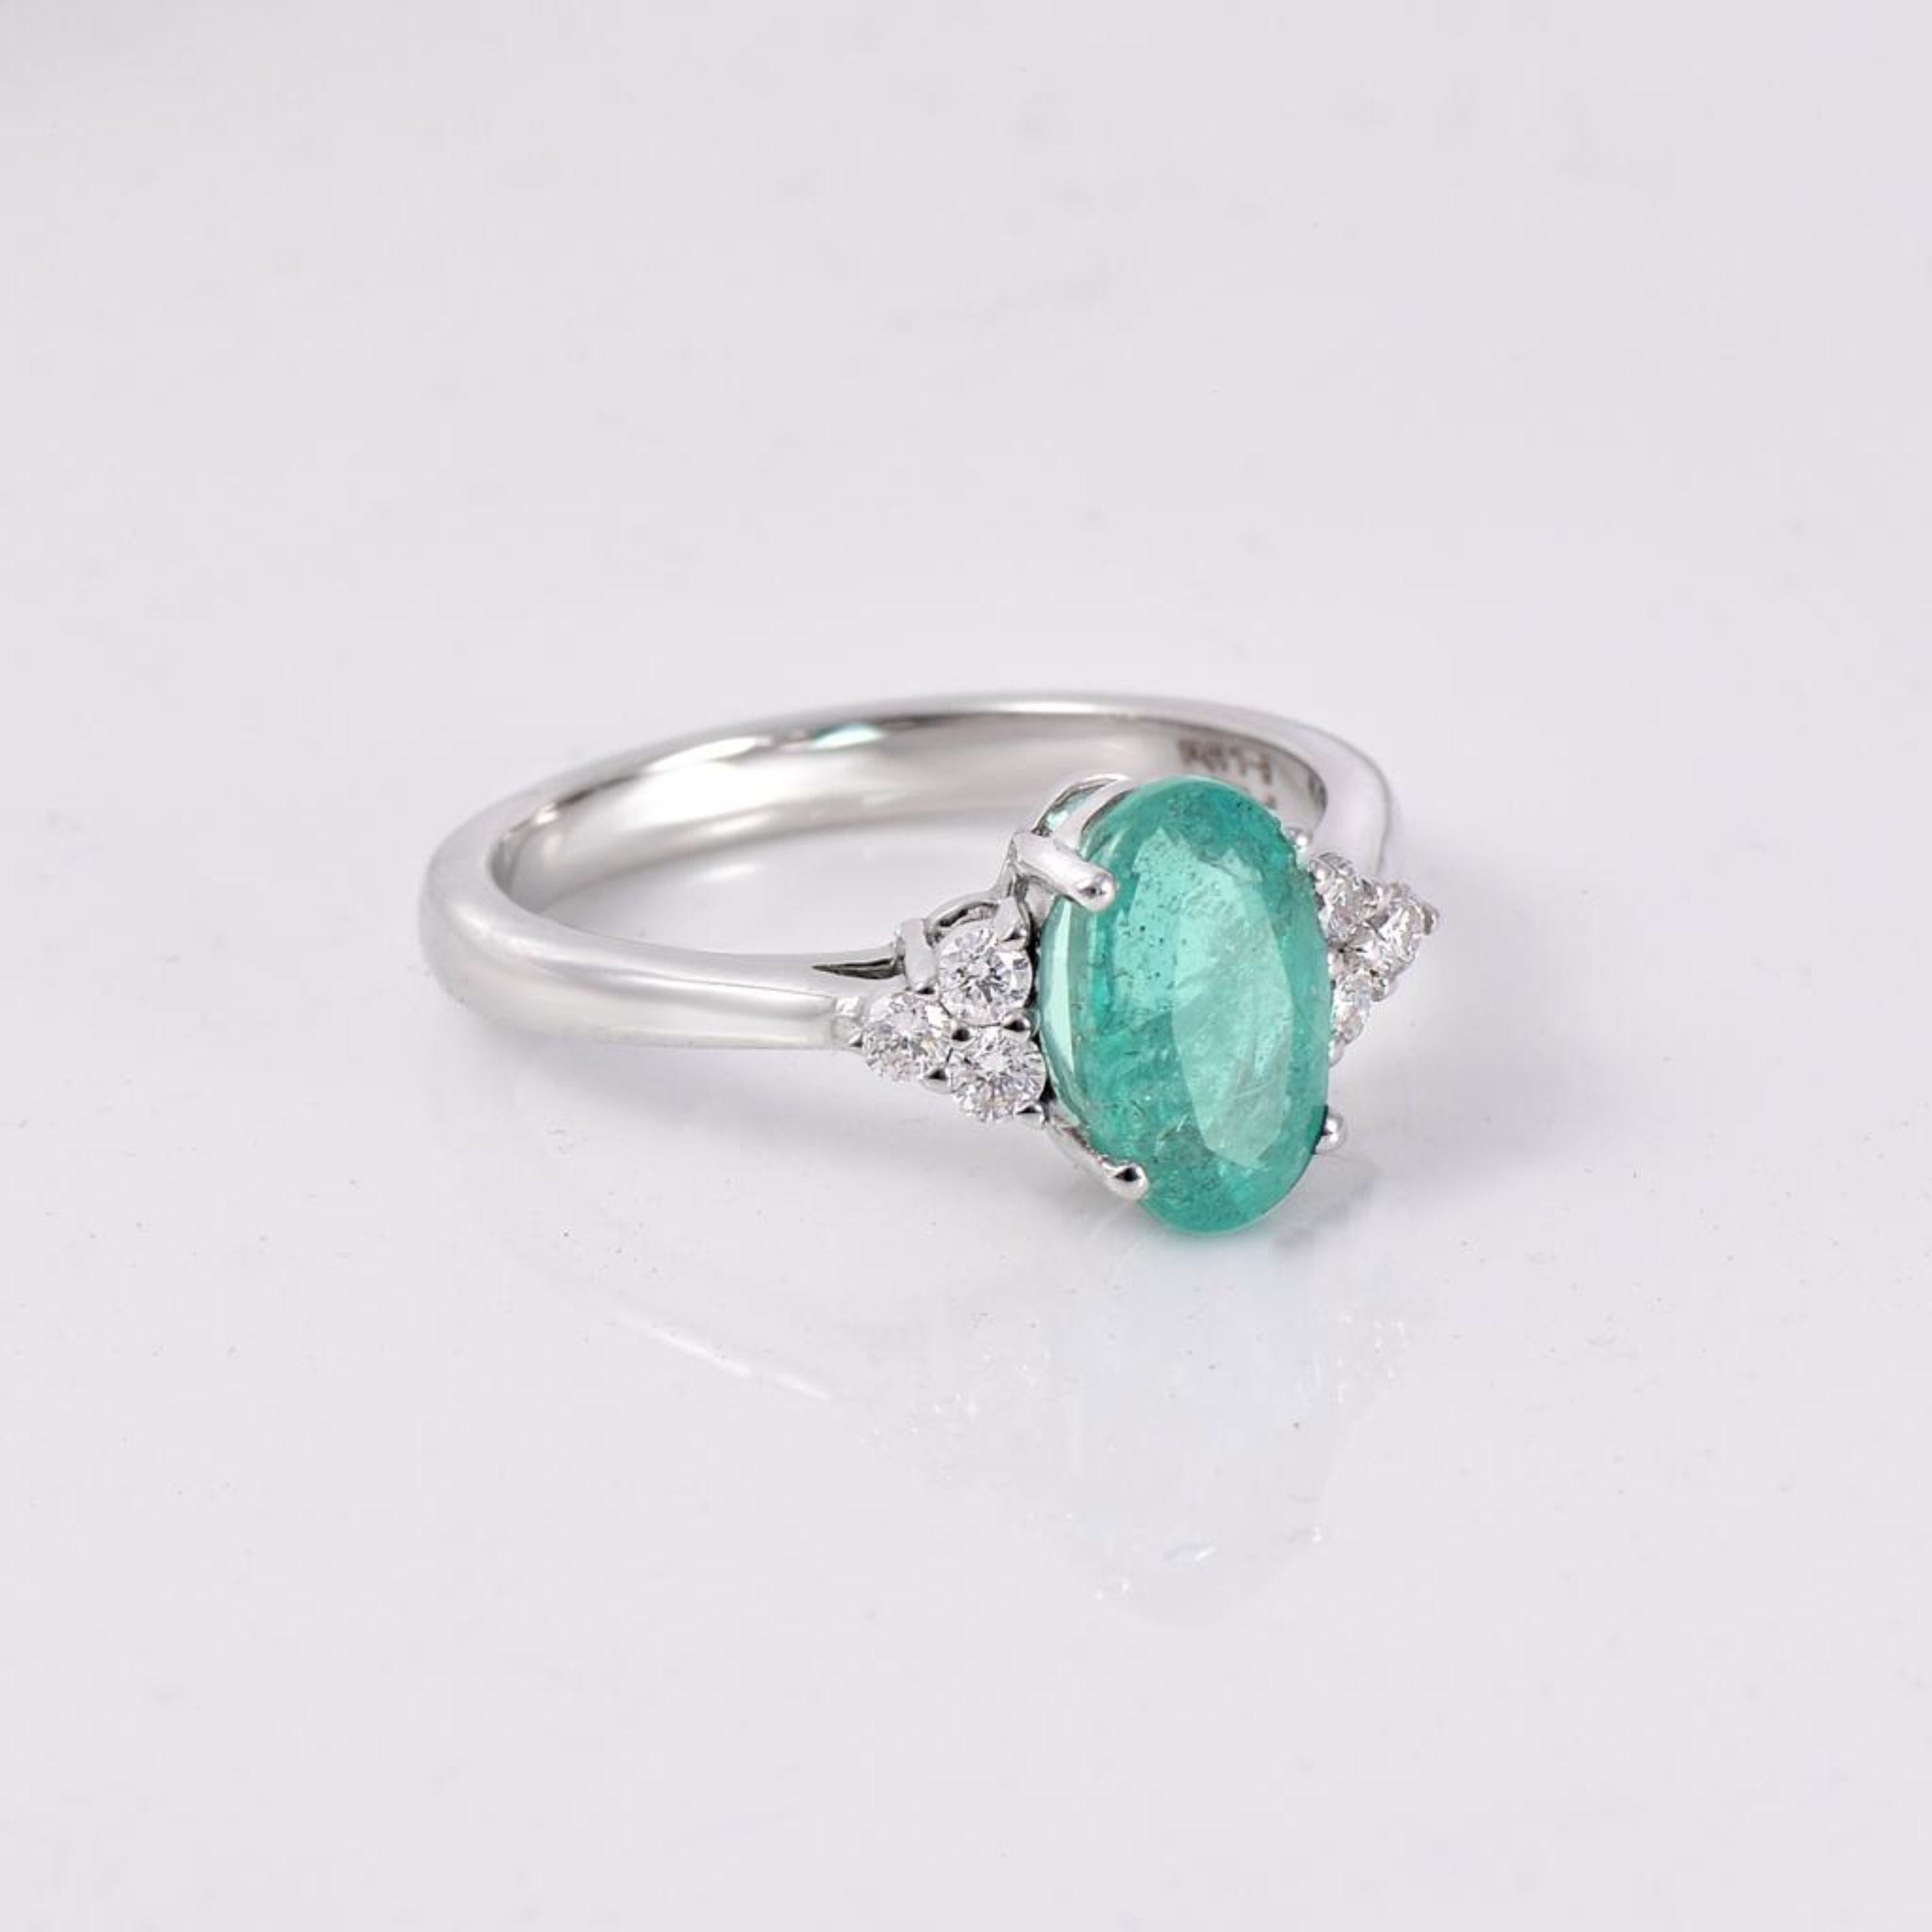 For Sale:  Antique White Gold 2 Carat Emerald Engagement Ring, Unique Diamond Wedding Ring 5